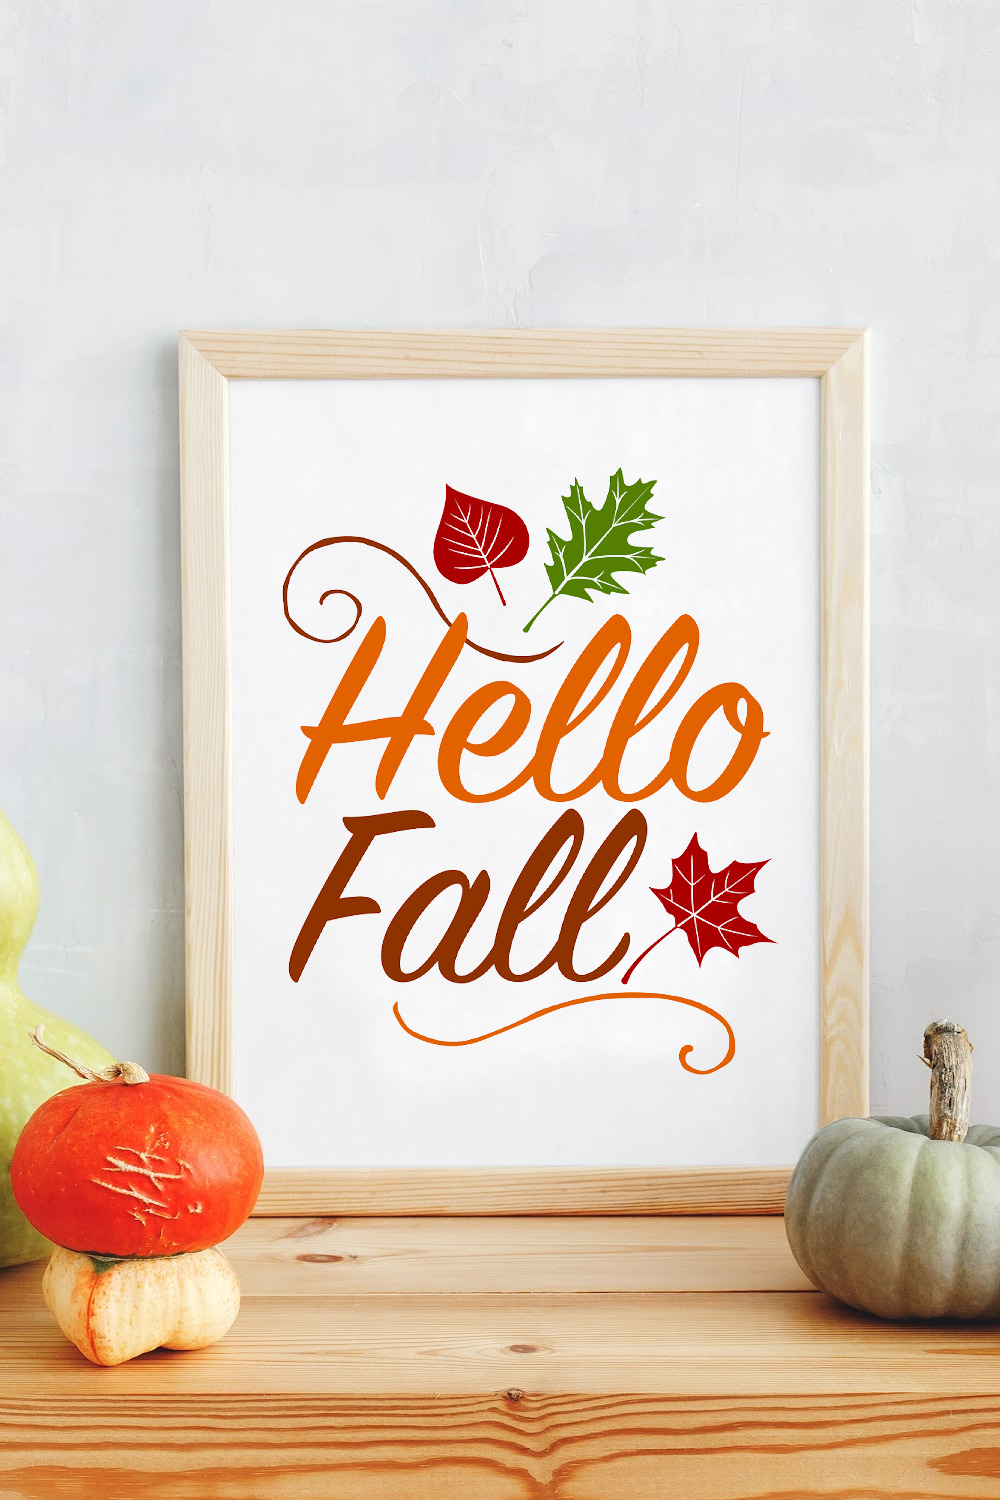 "Hello Fall" fall saying free printable quote.